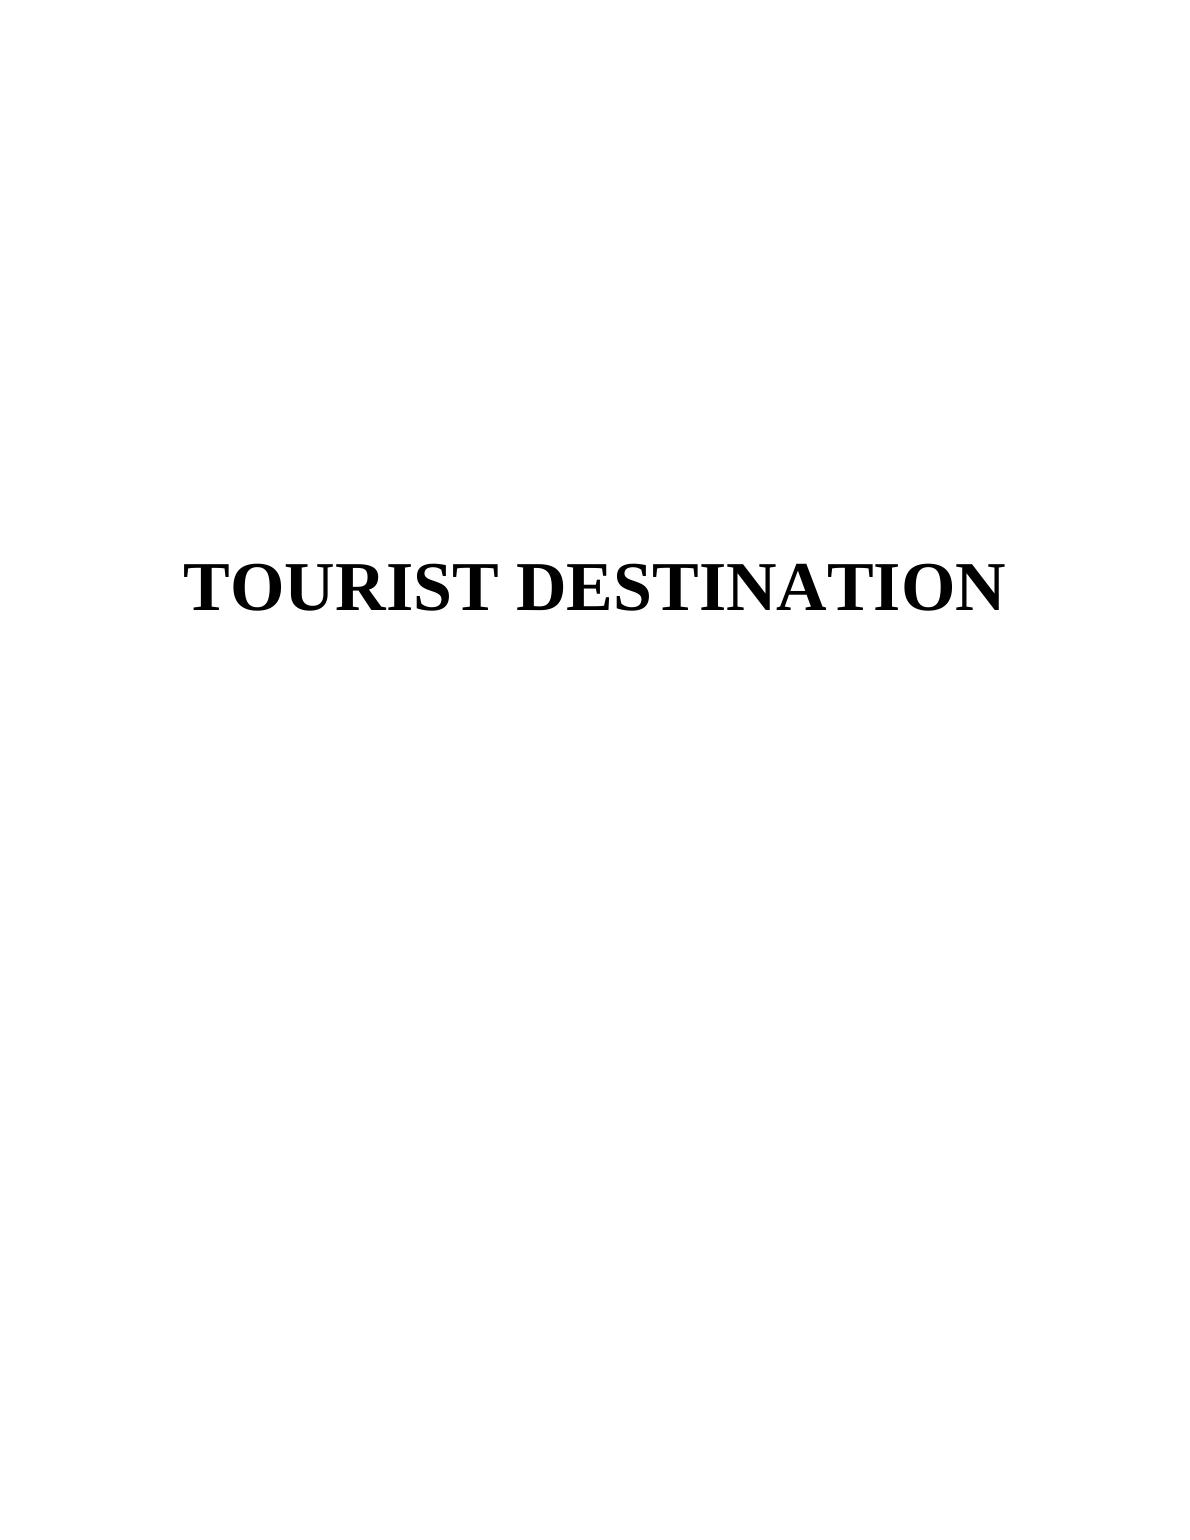 Tourist Destination : Assignment_1